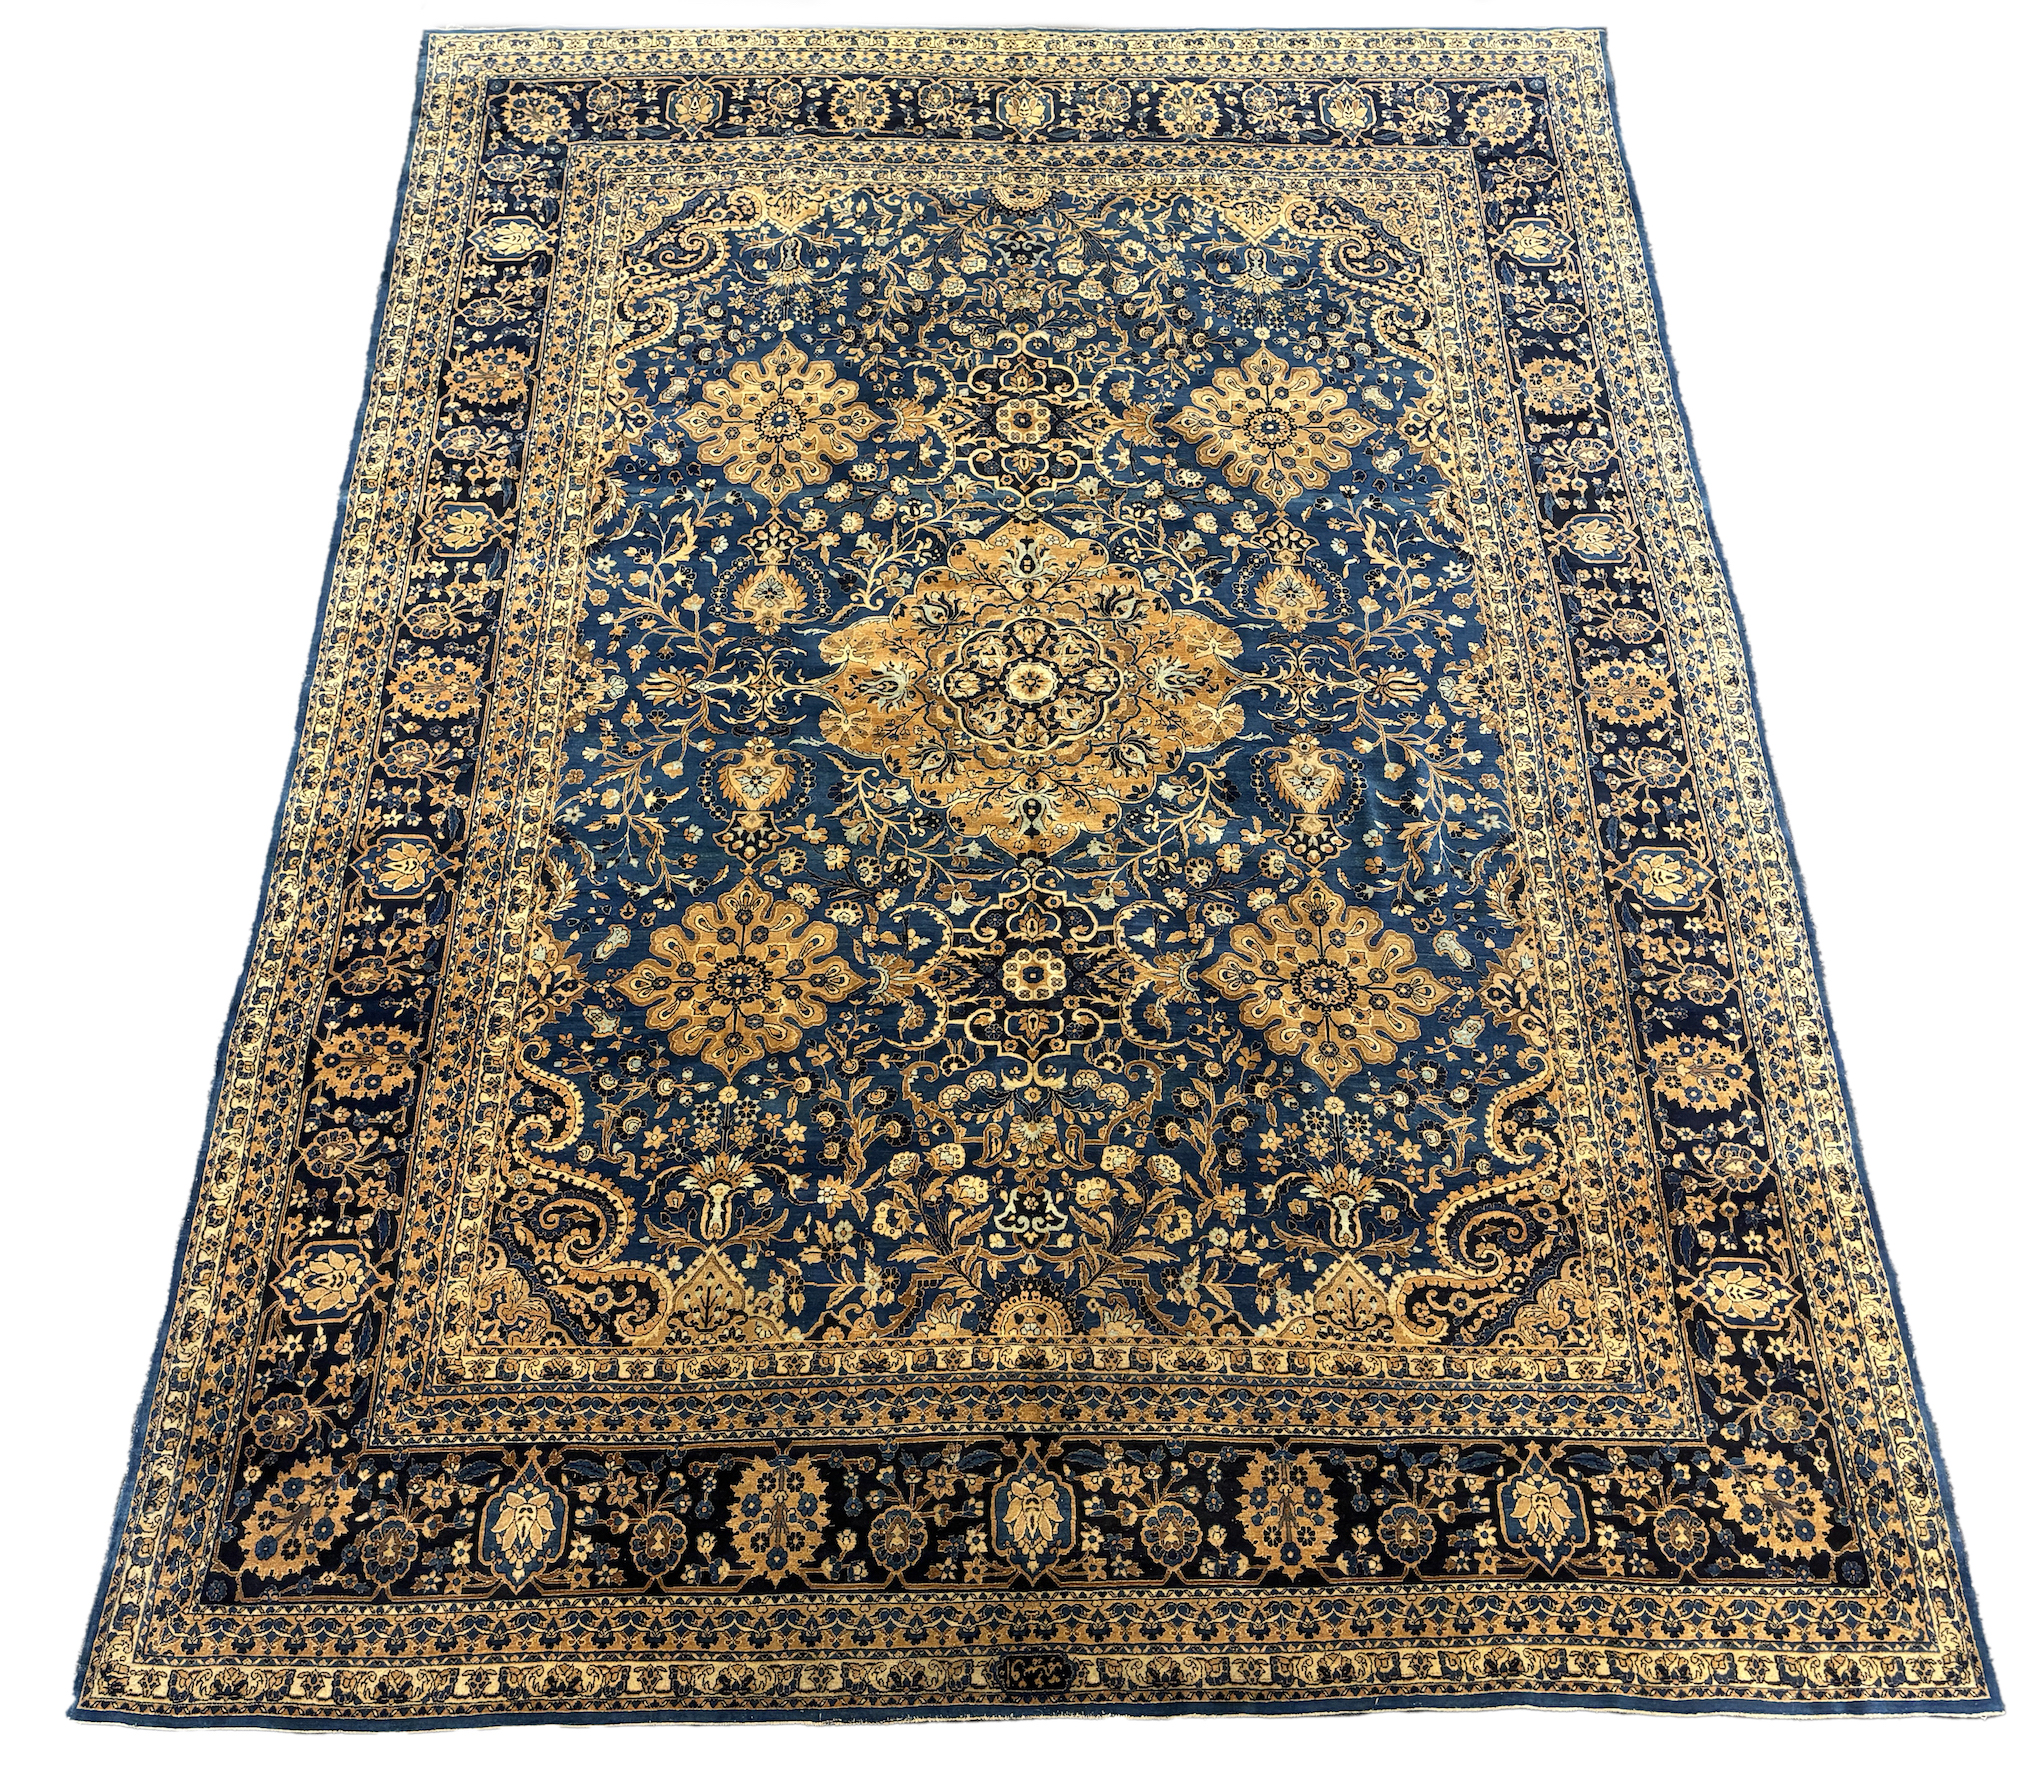 An early 20th century Kirman blue ground carpet, 425 x 325cm